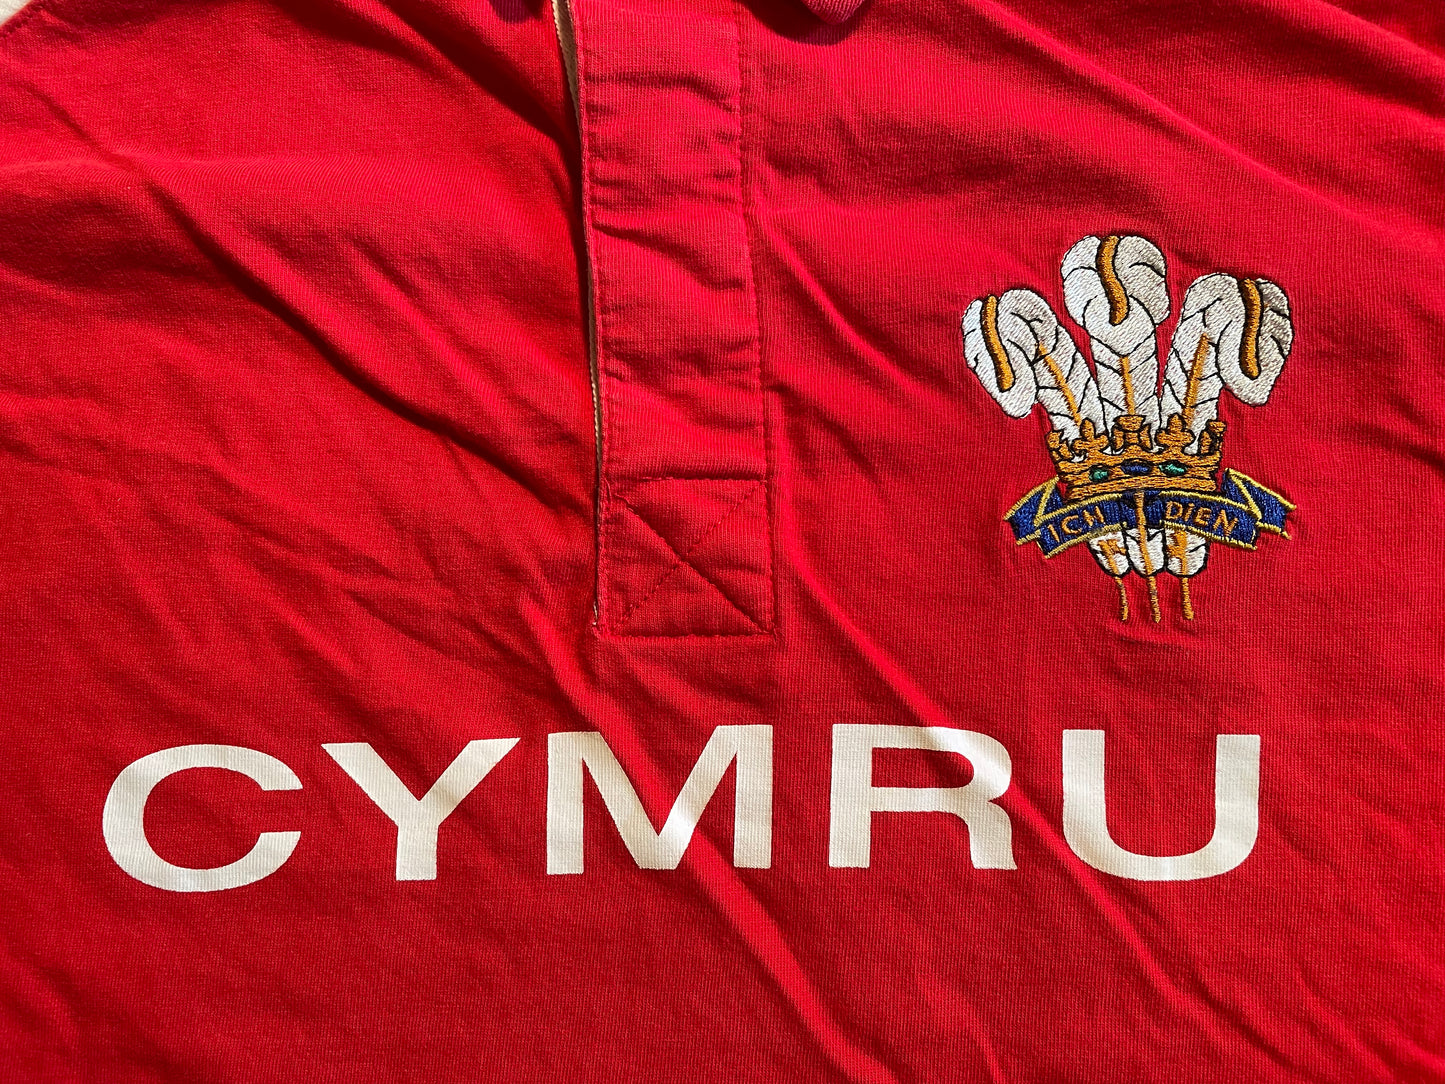 Wales Rugby Shirt CYMRU (very good) Adults XXL. Height 28 inches